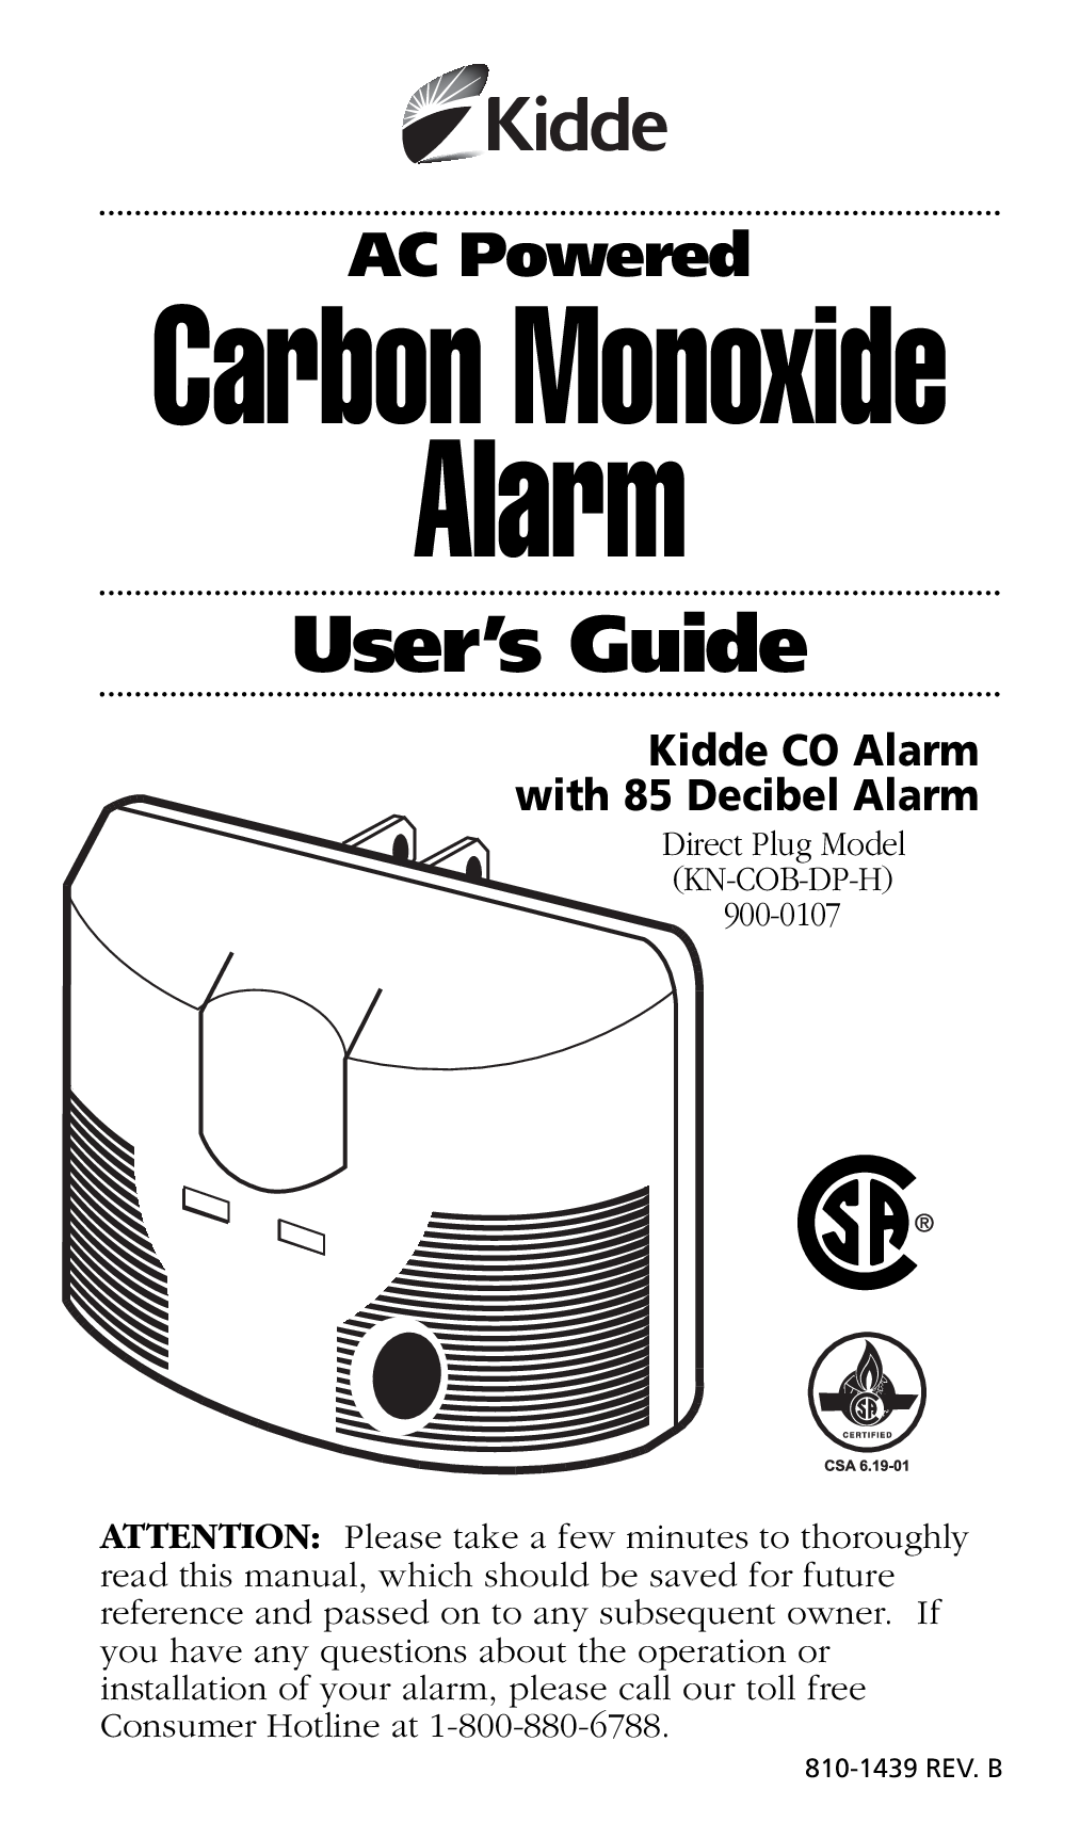 Kidde KN-COB-DP-H) manual Carbon Monoxide, User’s Guide, AC Powered, Kidde CO Alarm with 85 Decibel Alarm 